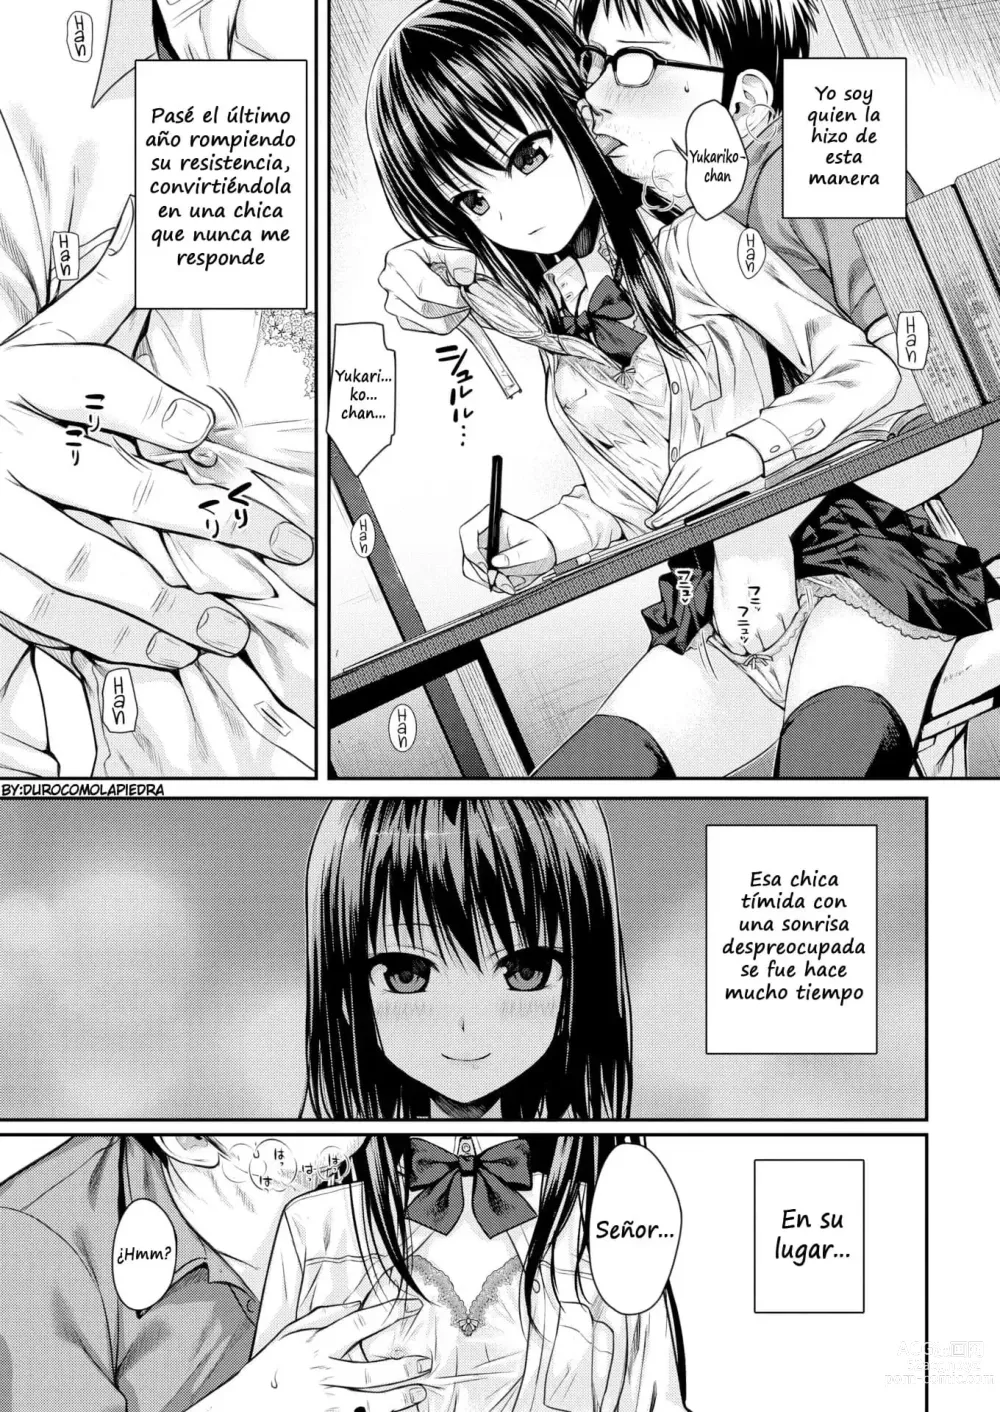 Page 4 of manga Prototype Mademoiselle Ch. 8-9